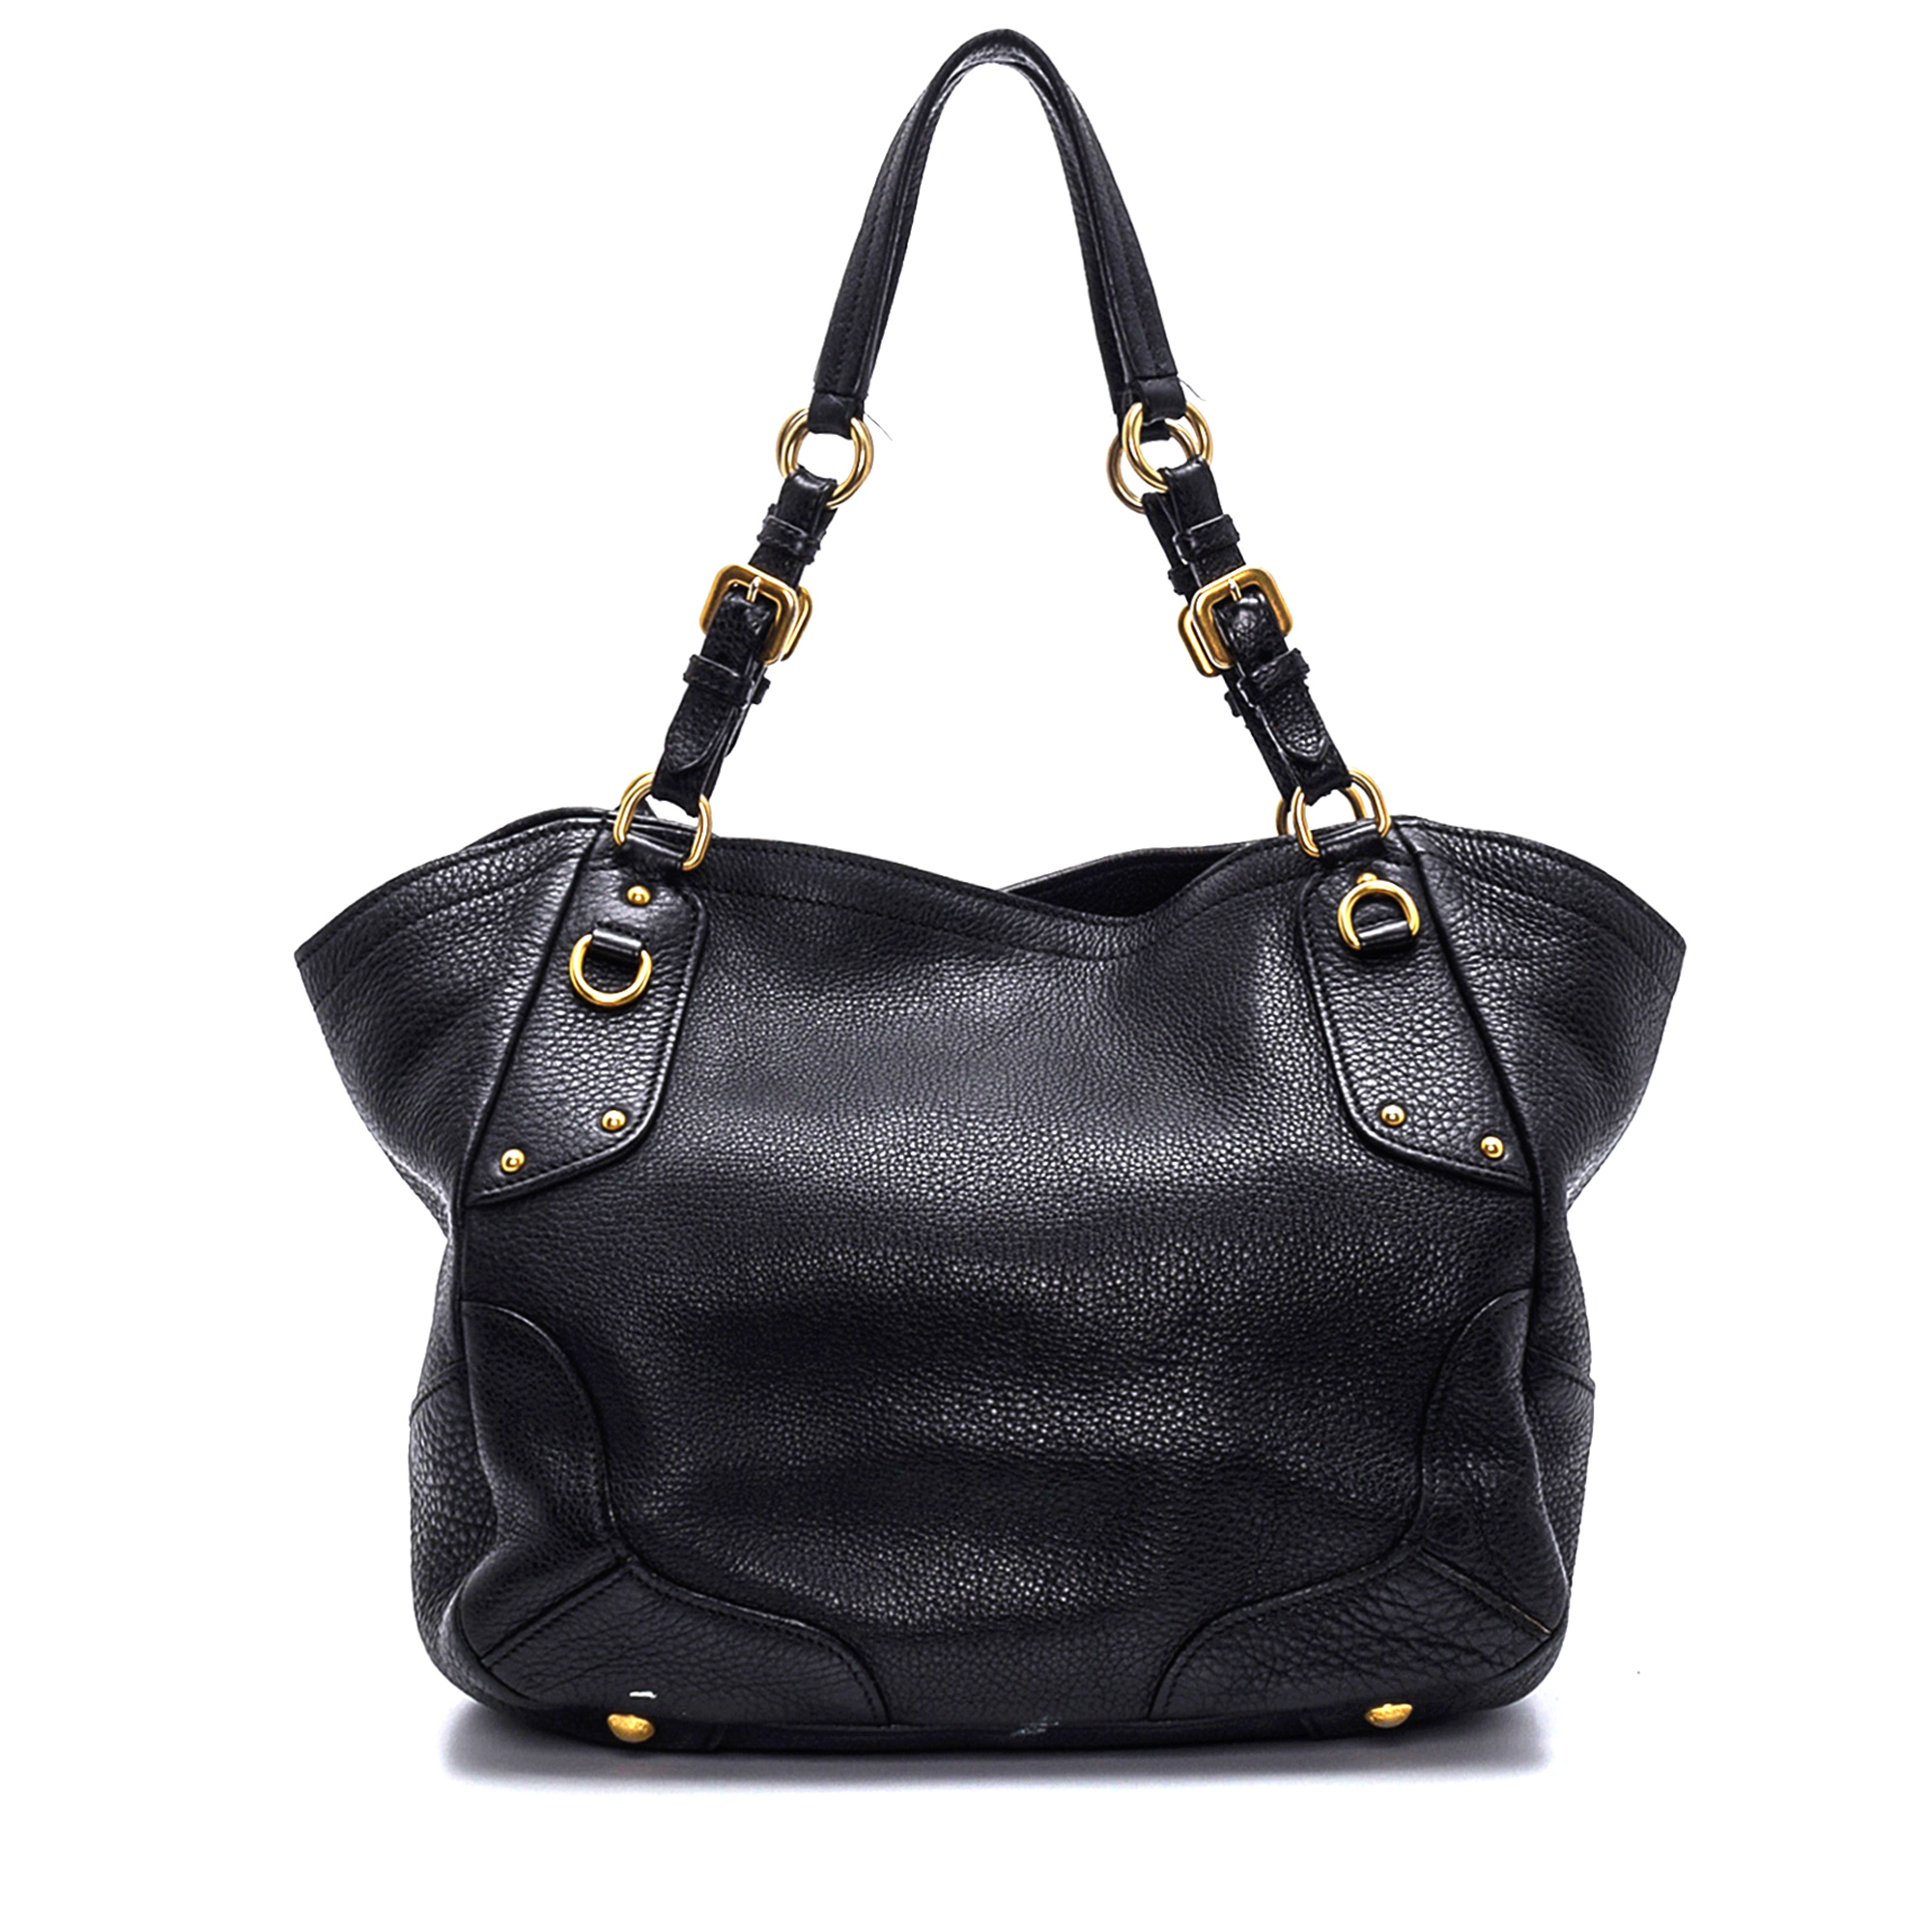 Prada - Black Vitello Daino Leather Tote Bag